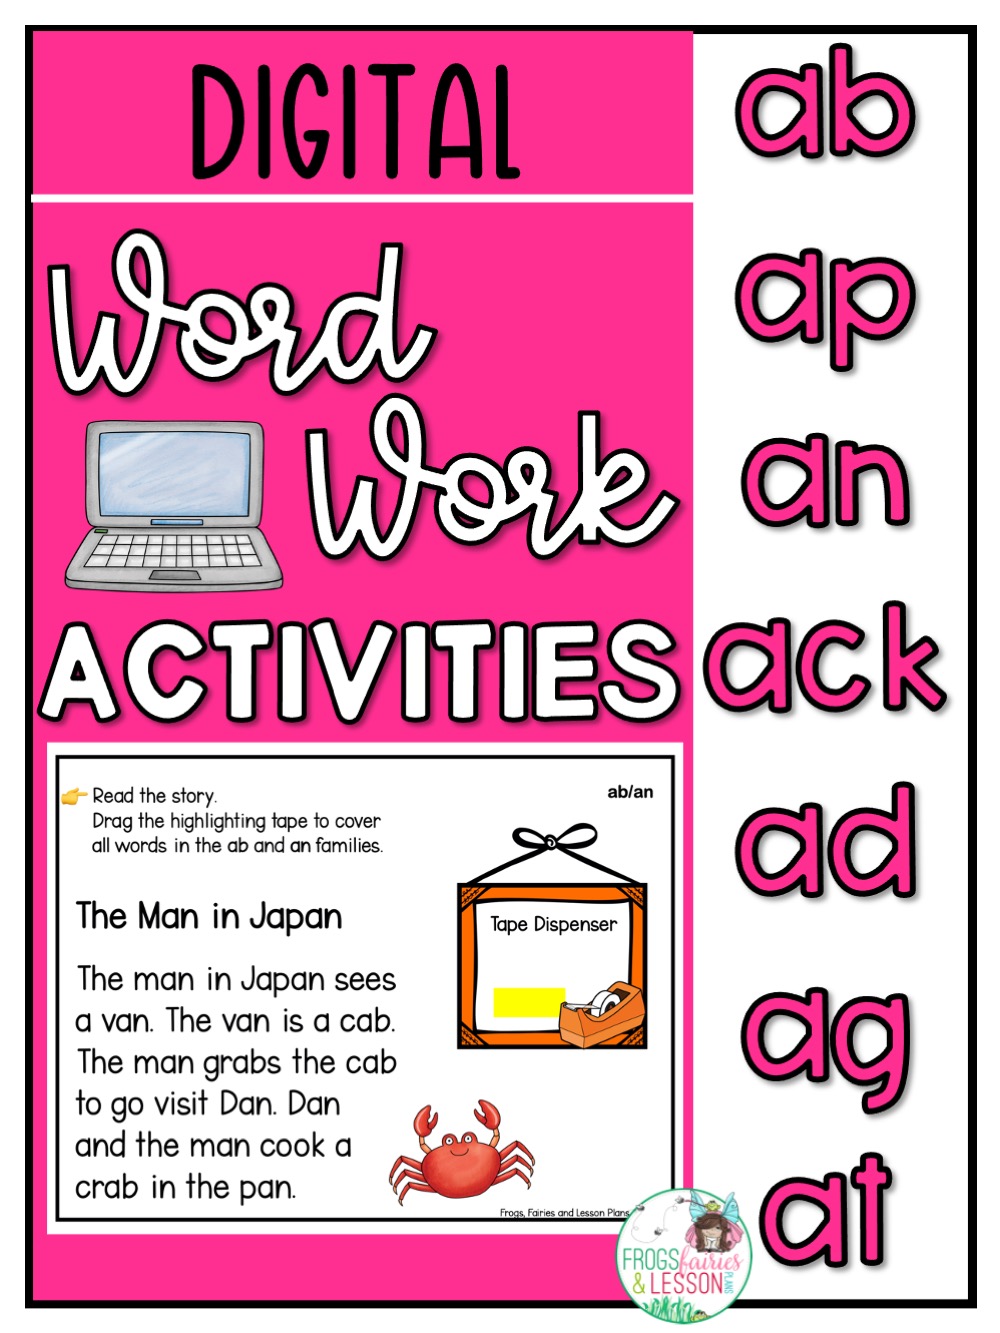 Digital Word Work Activities - CVC, CVCC, and CCVC Words with Short Vowel Sounds